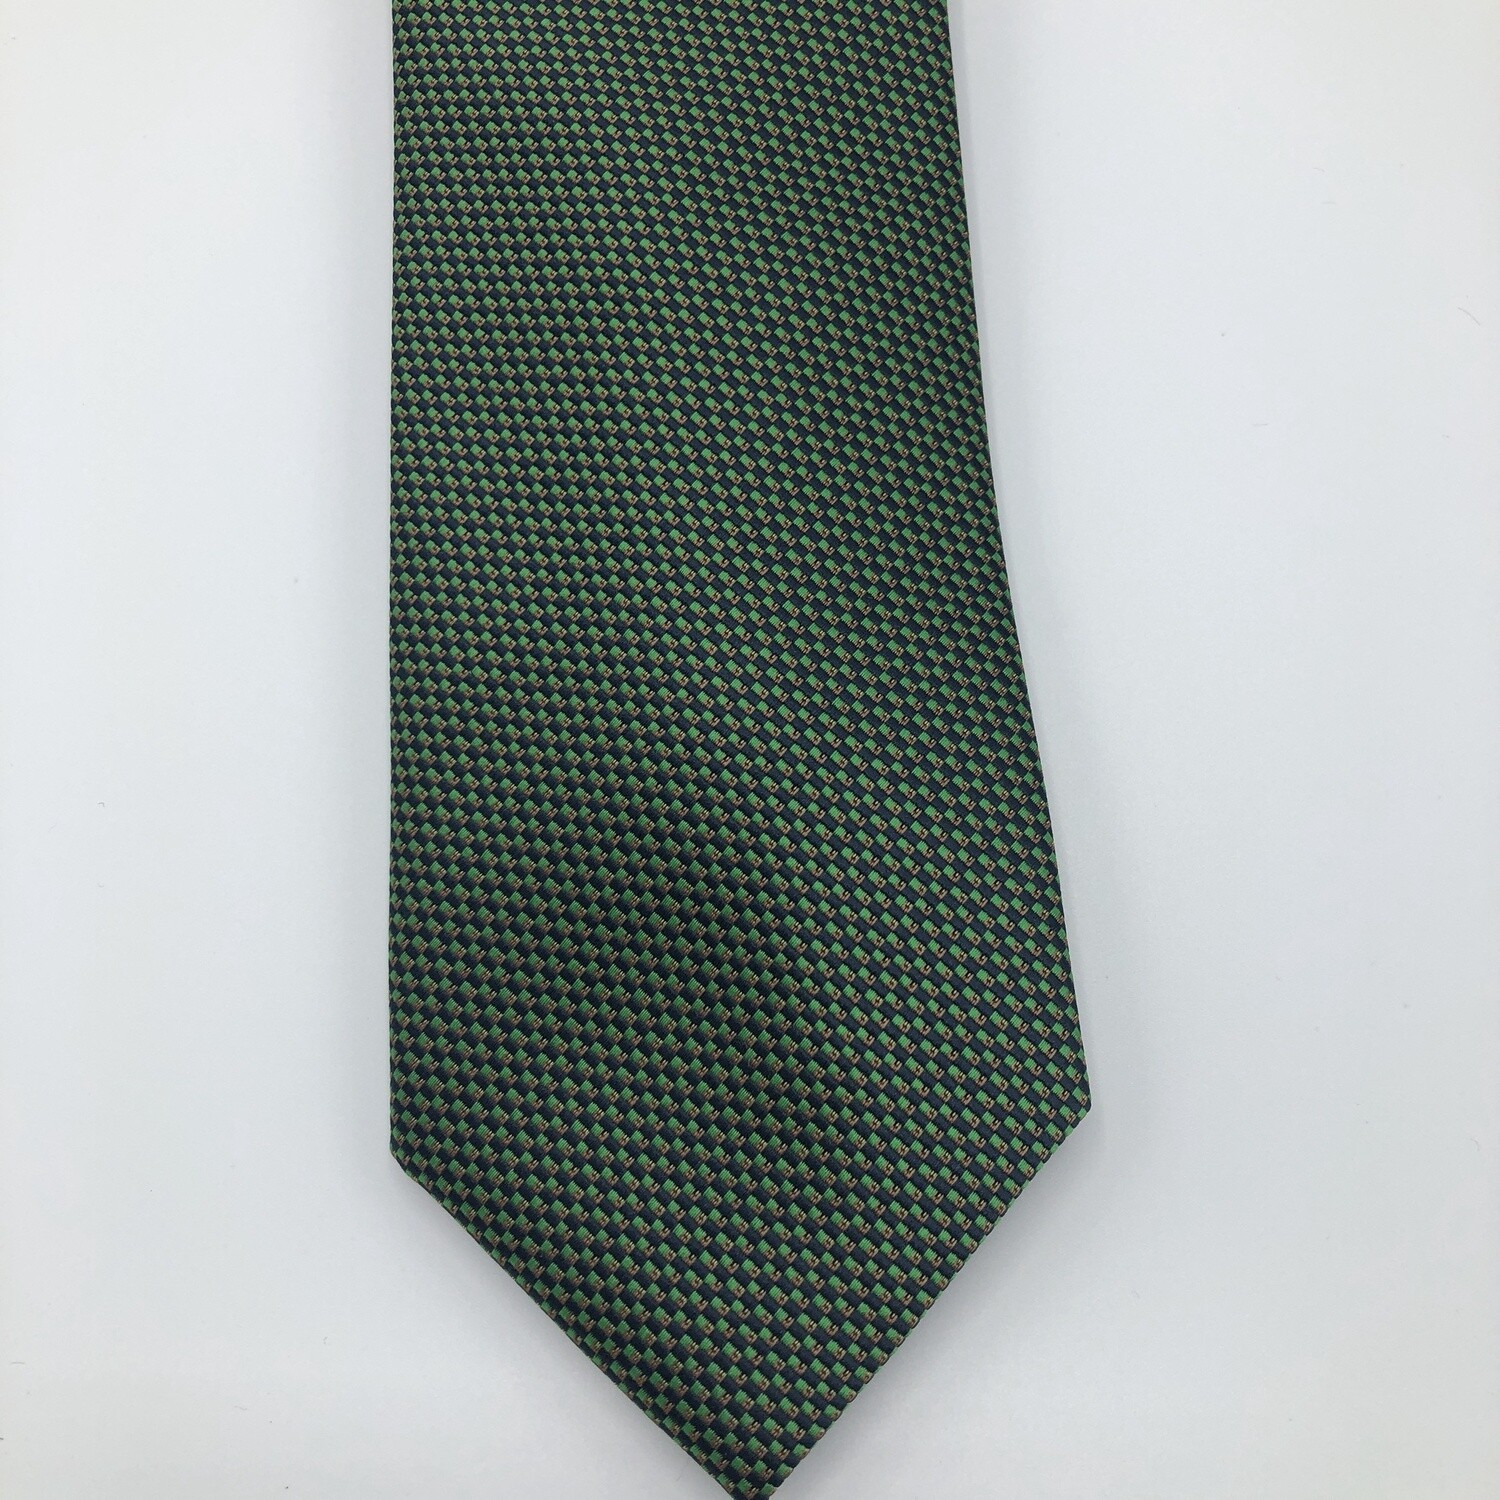 Barcelona Cravatte 11655